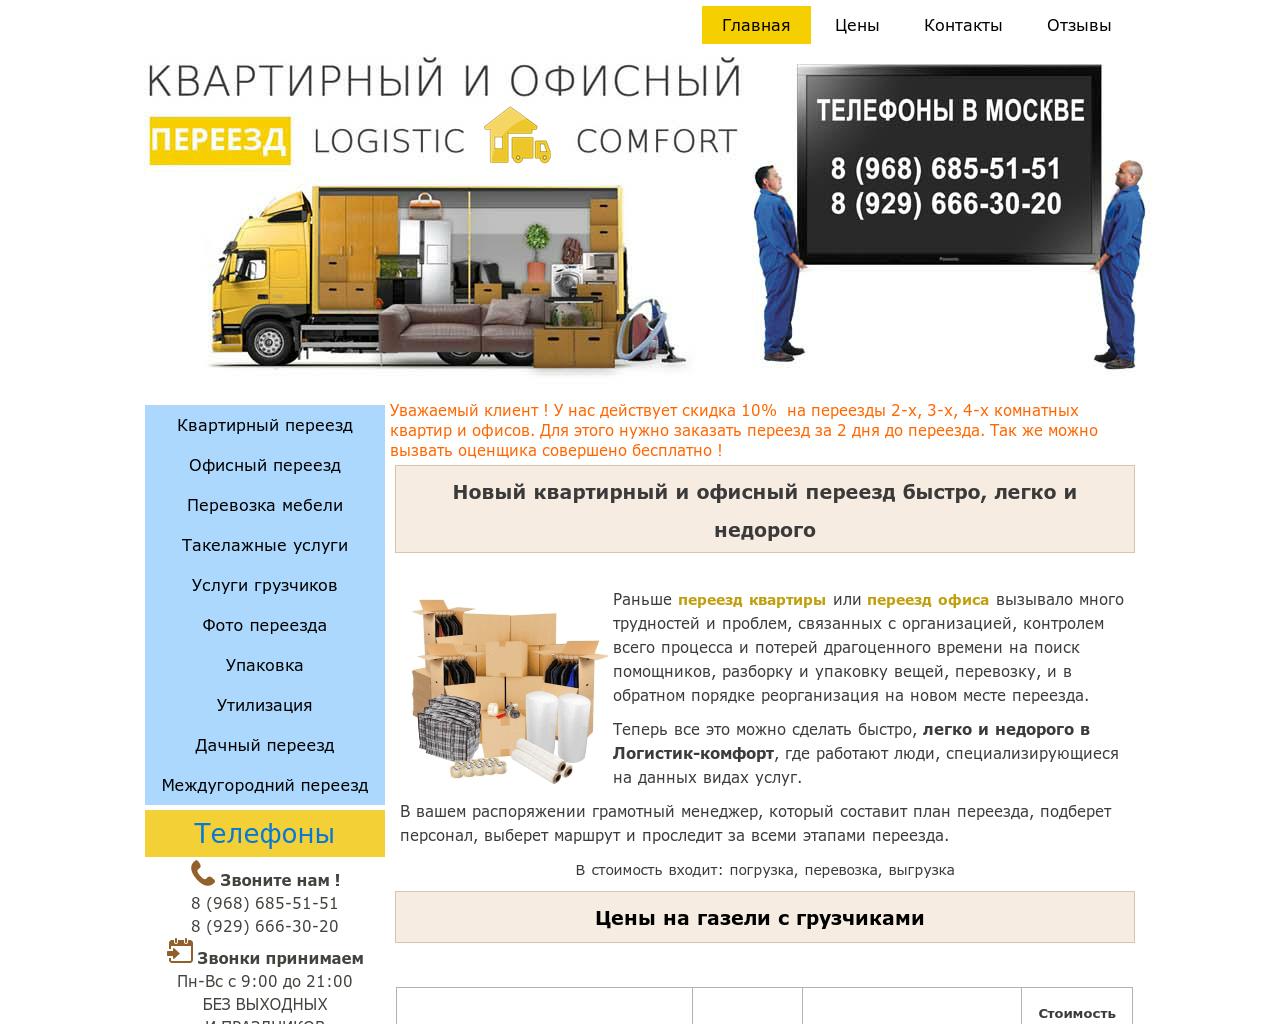 Изображение сайта logistic-comfort.ru в разрешении 1280x1024